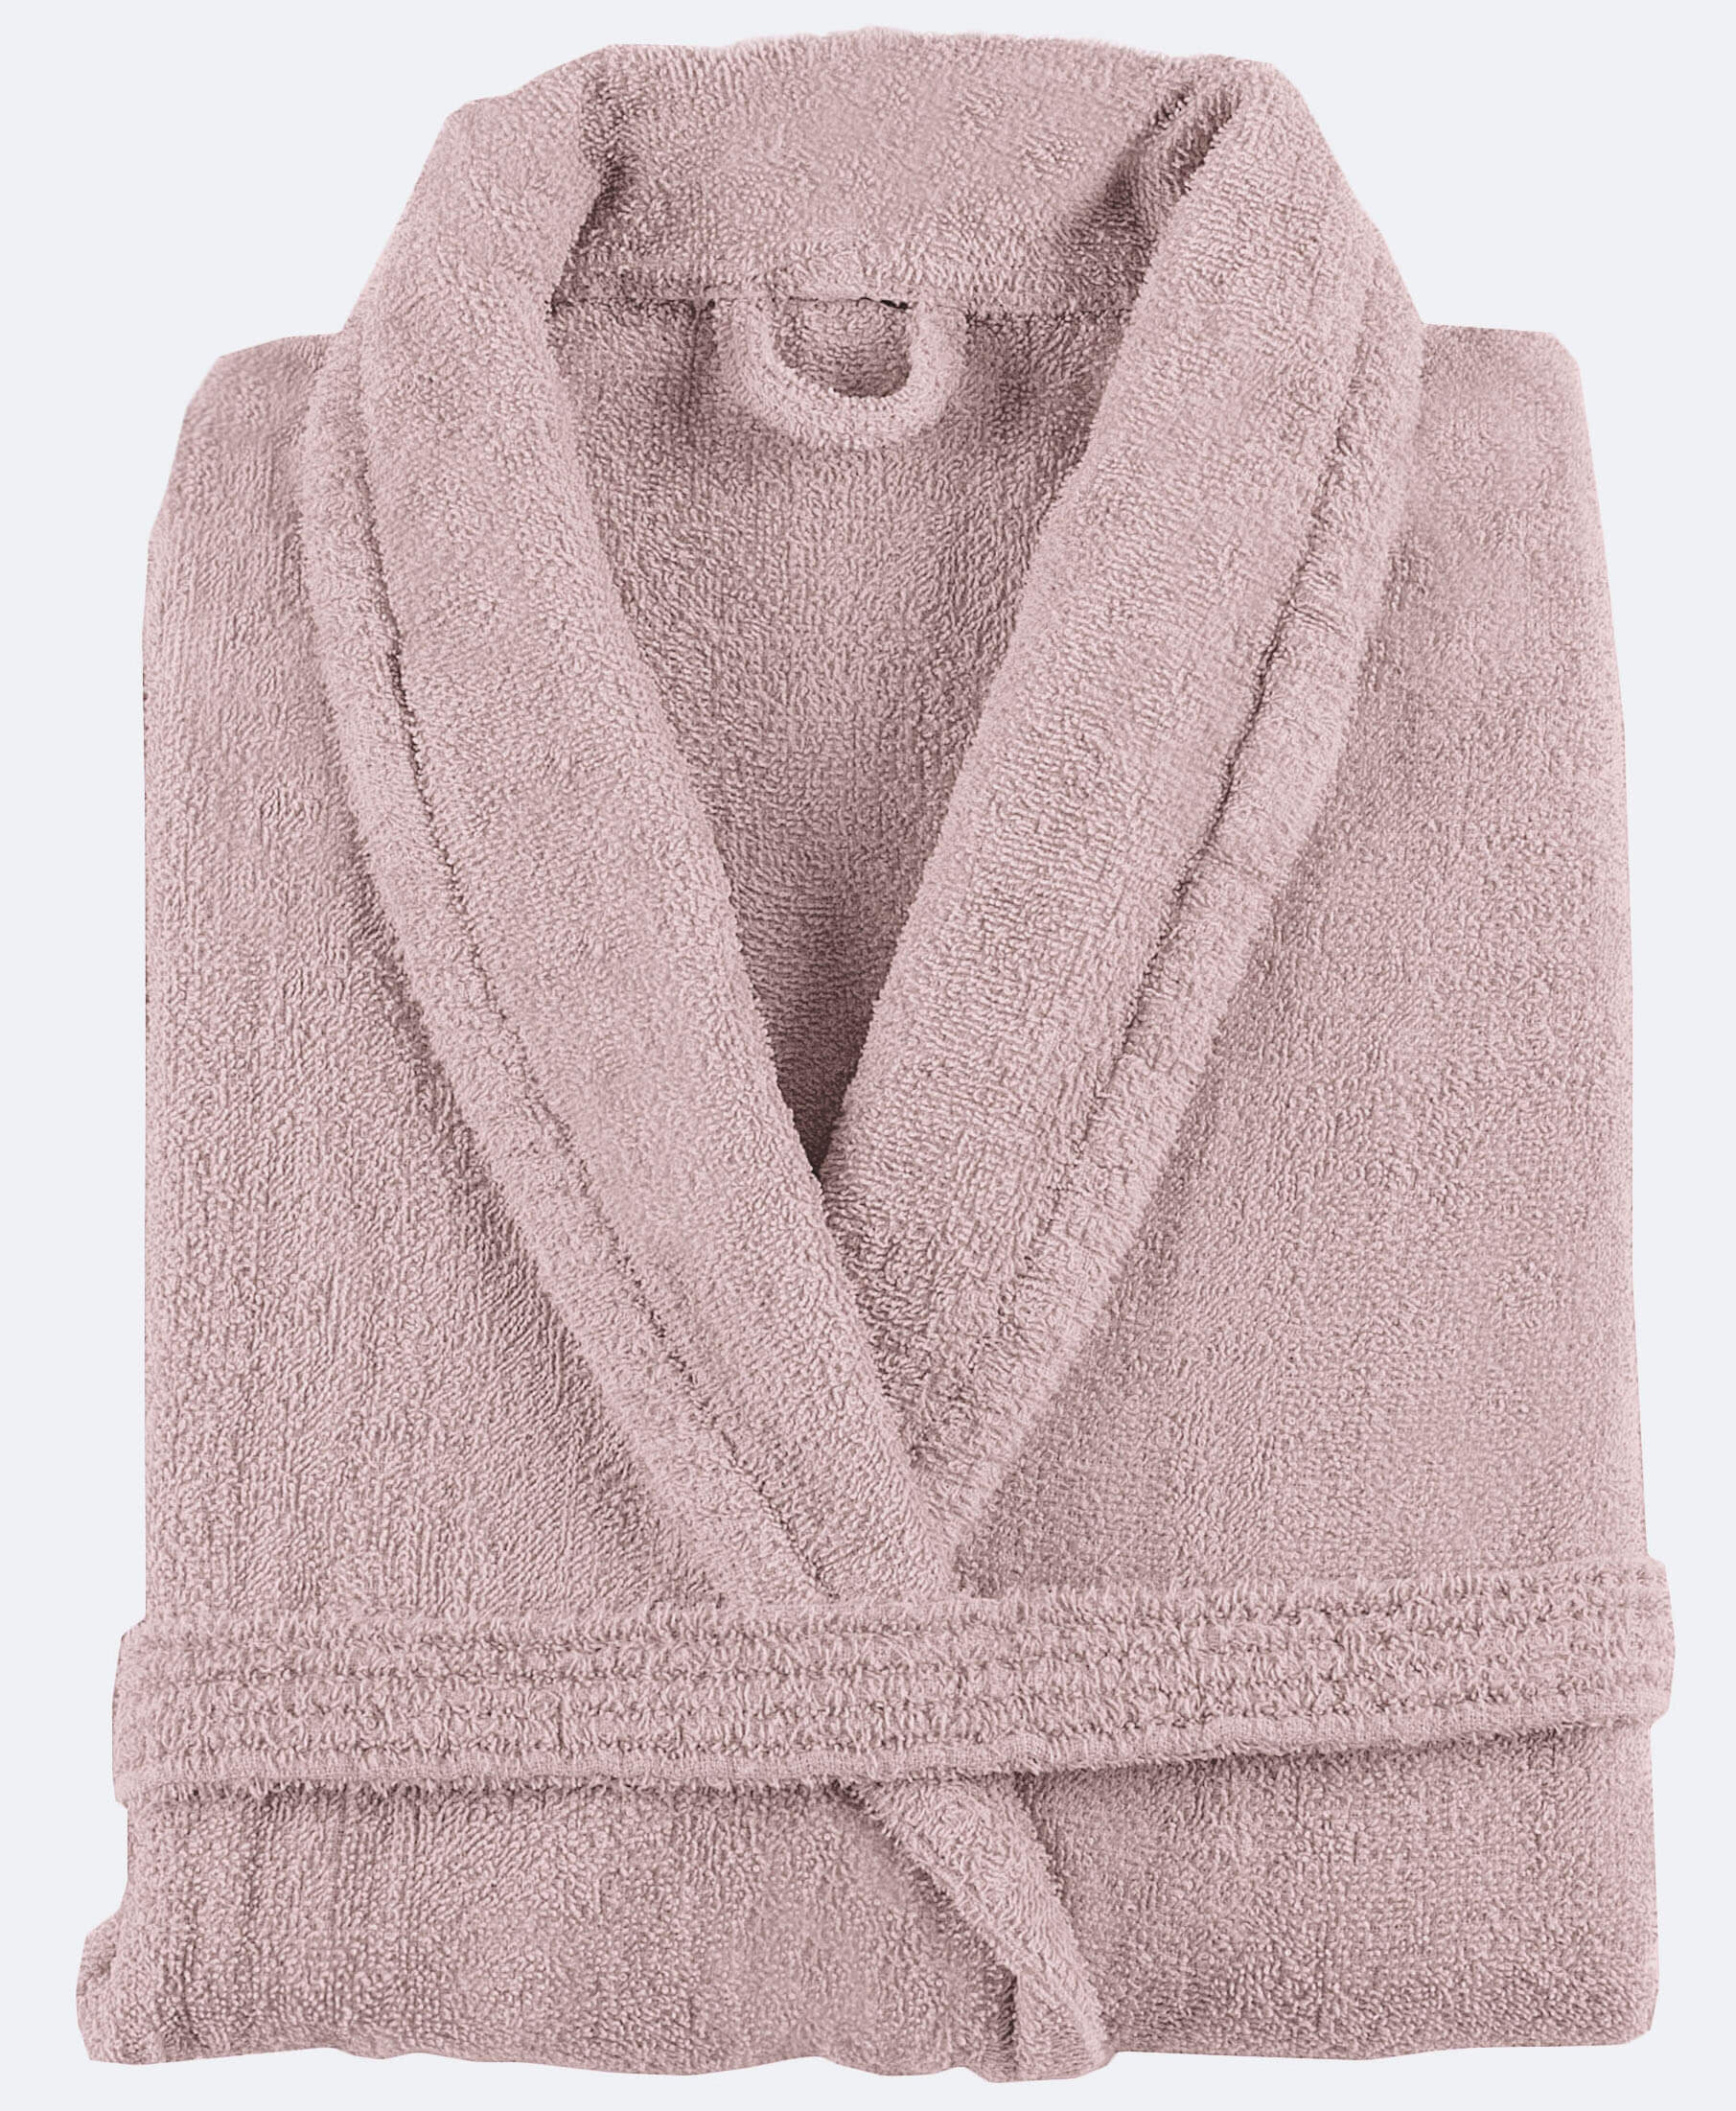 Женский розовый халат New Nude ☞ Размер: S